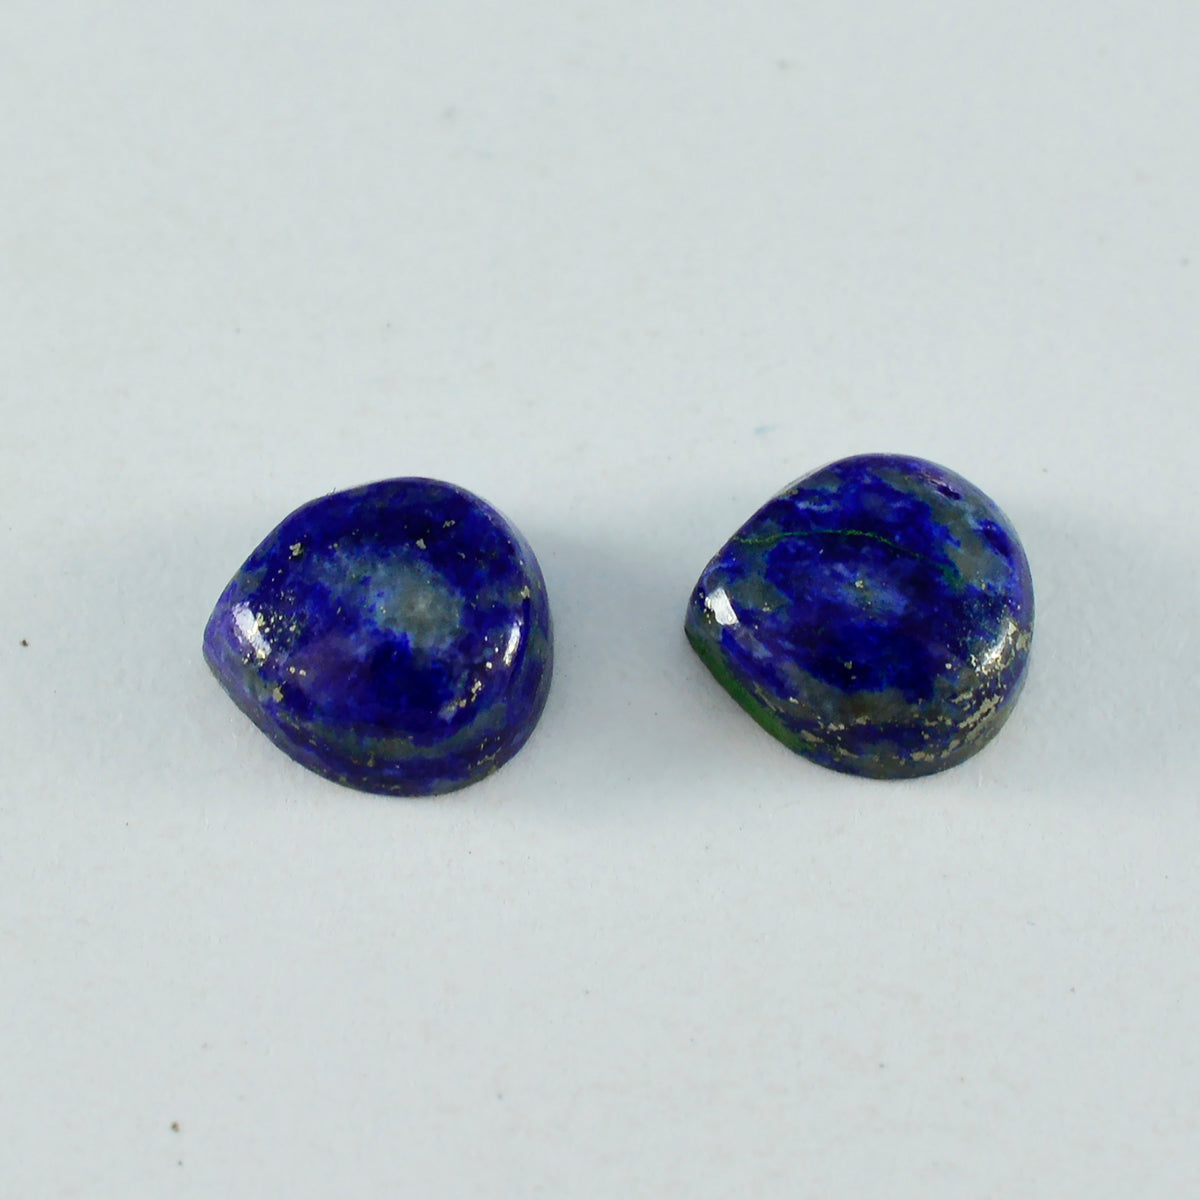 Riyogems 1PC Blue Lapis Lazuli Cabochon 12x12 mm Heart Shape beautiful Quality Gemstone